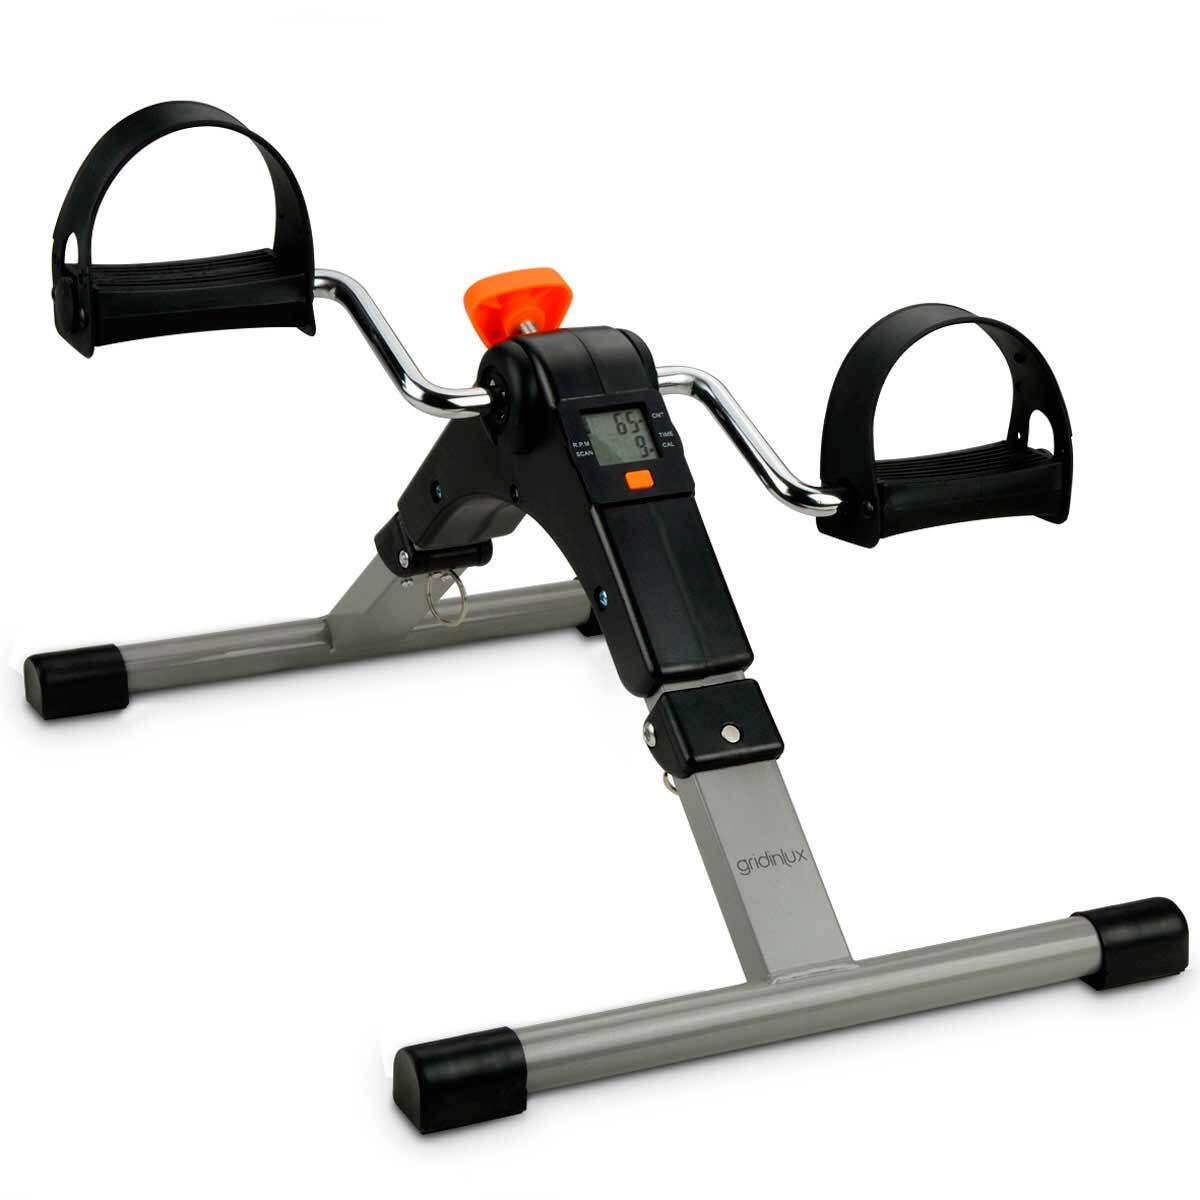 Small Fit 500 Exercitador Manual Pedal Pernas Ginástica Passiva. Gridinlux